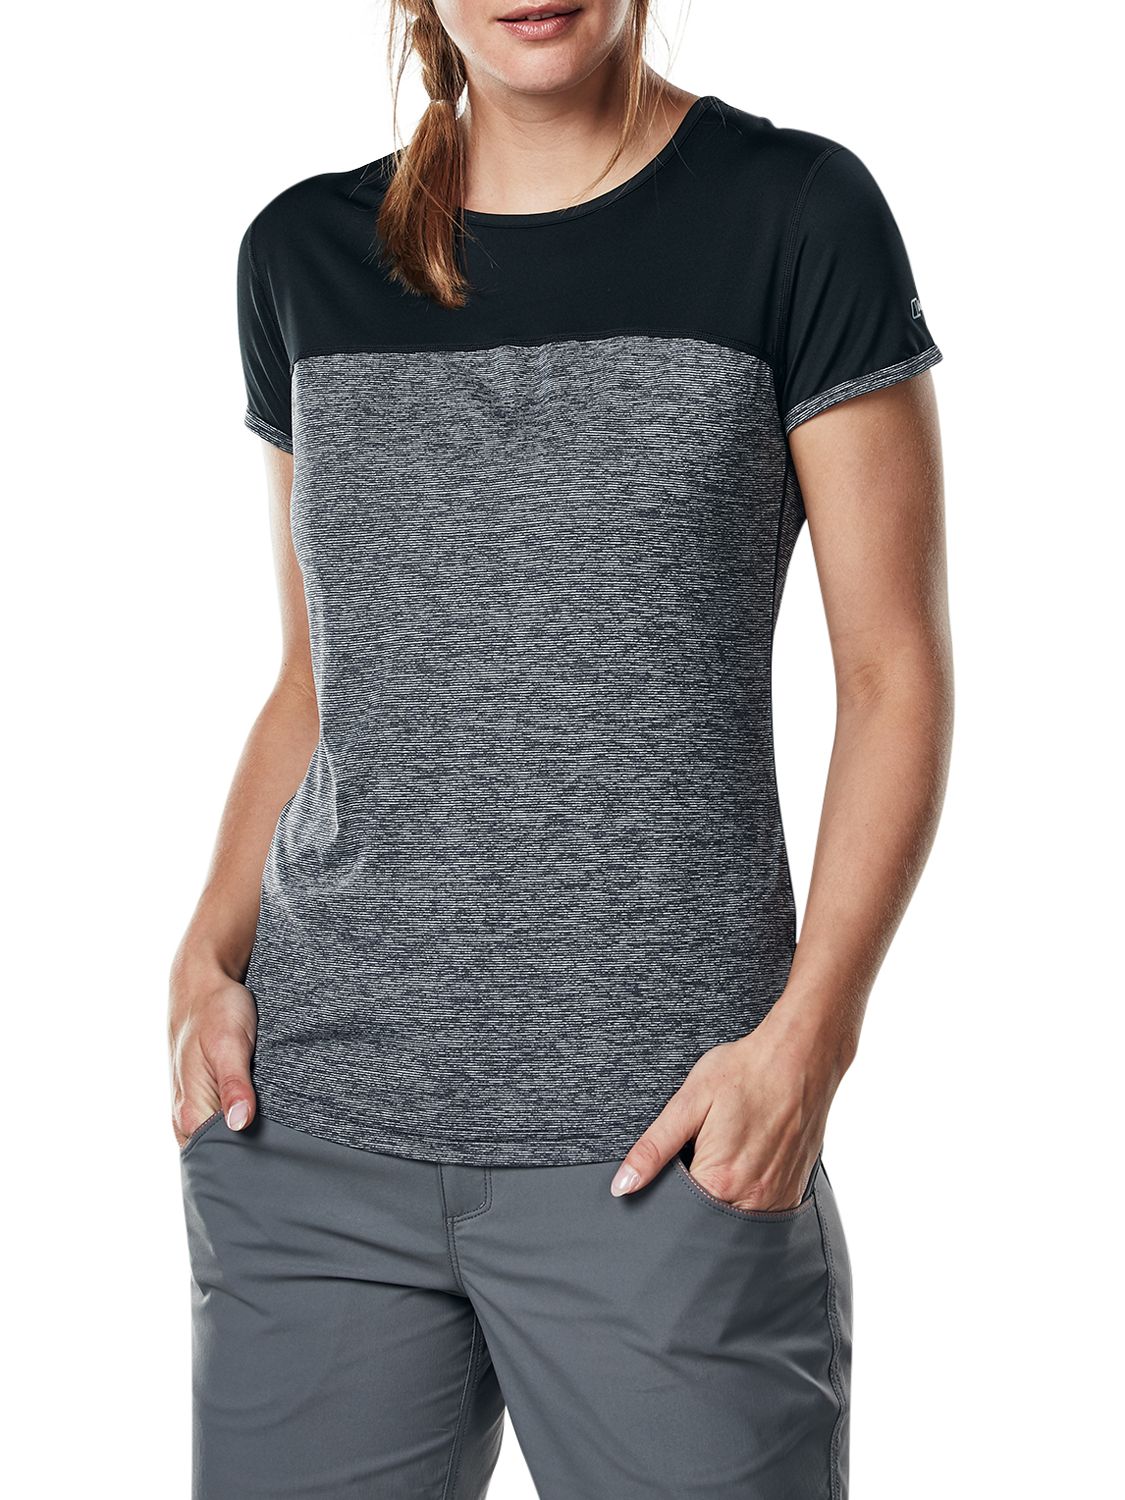 Berghaus Voyager Short Sleeve T-Shirt, Carbon Marl/Jet Black